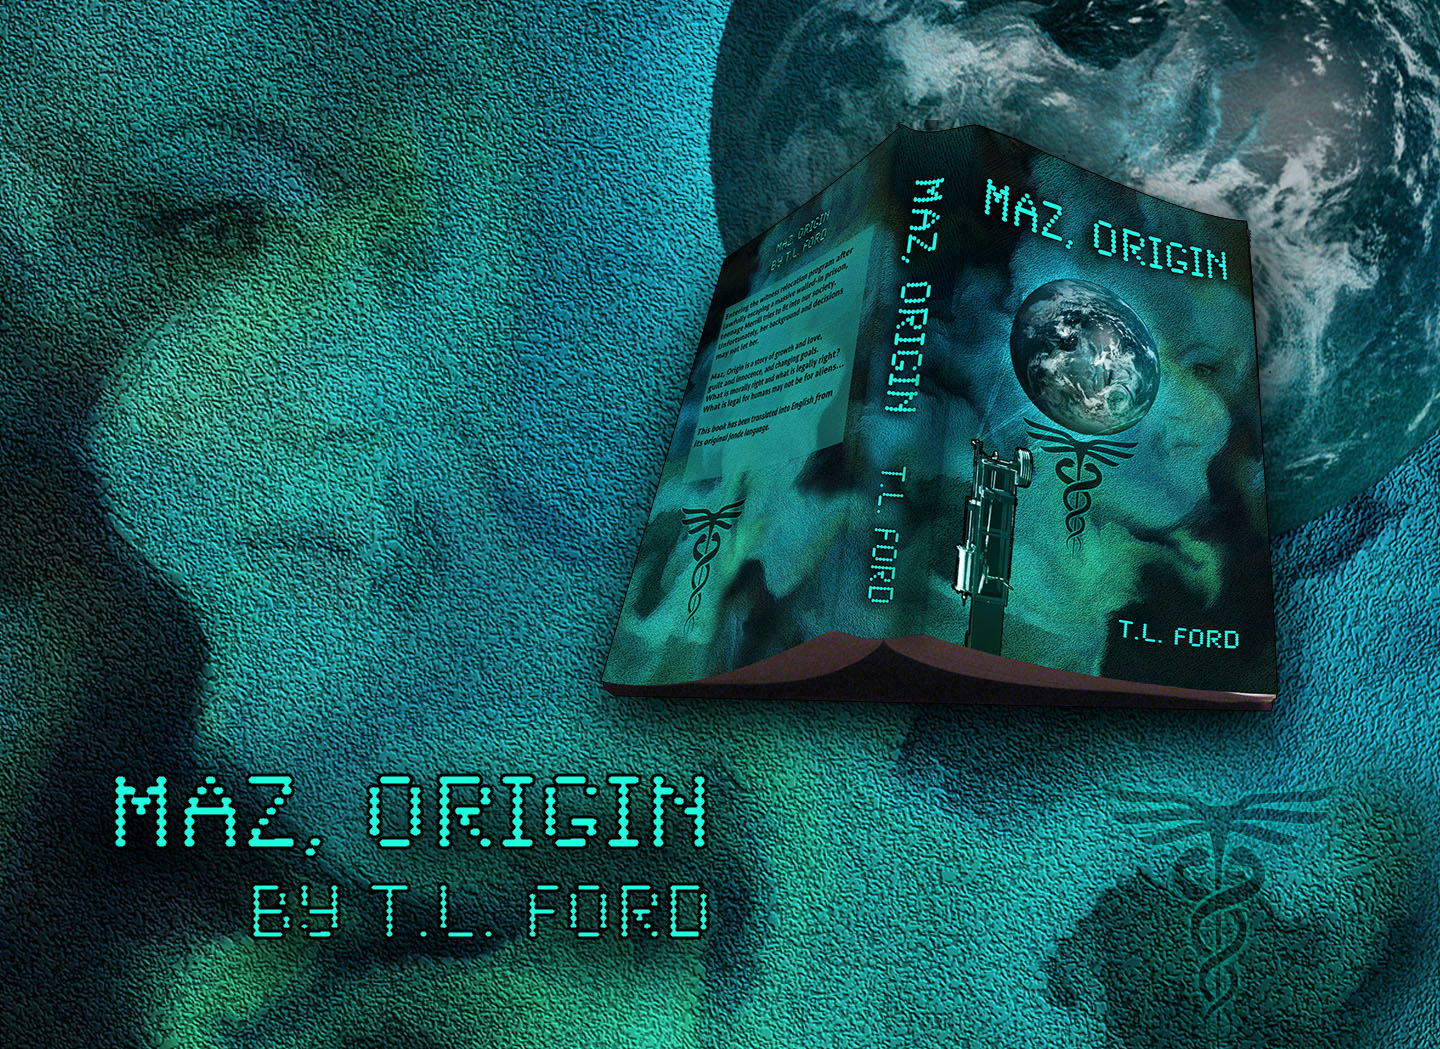 Maz, Origin book by T. L. Ford